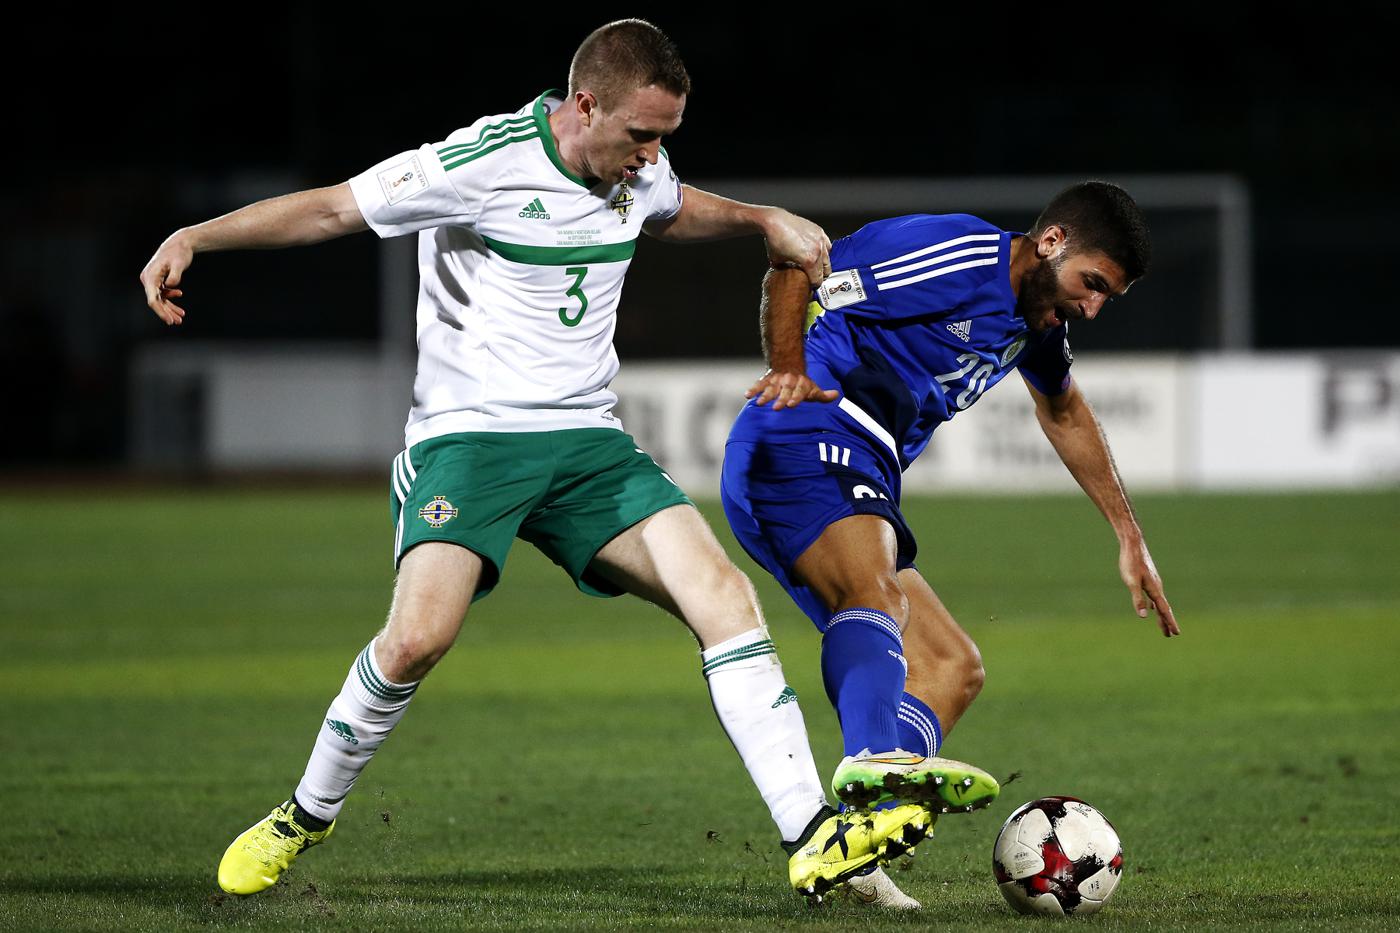 San Marino v Ireland - 0:2. Euro 2024. Match review, statistics